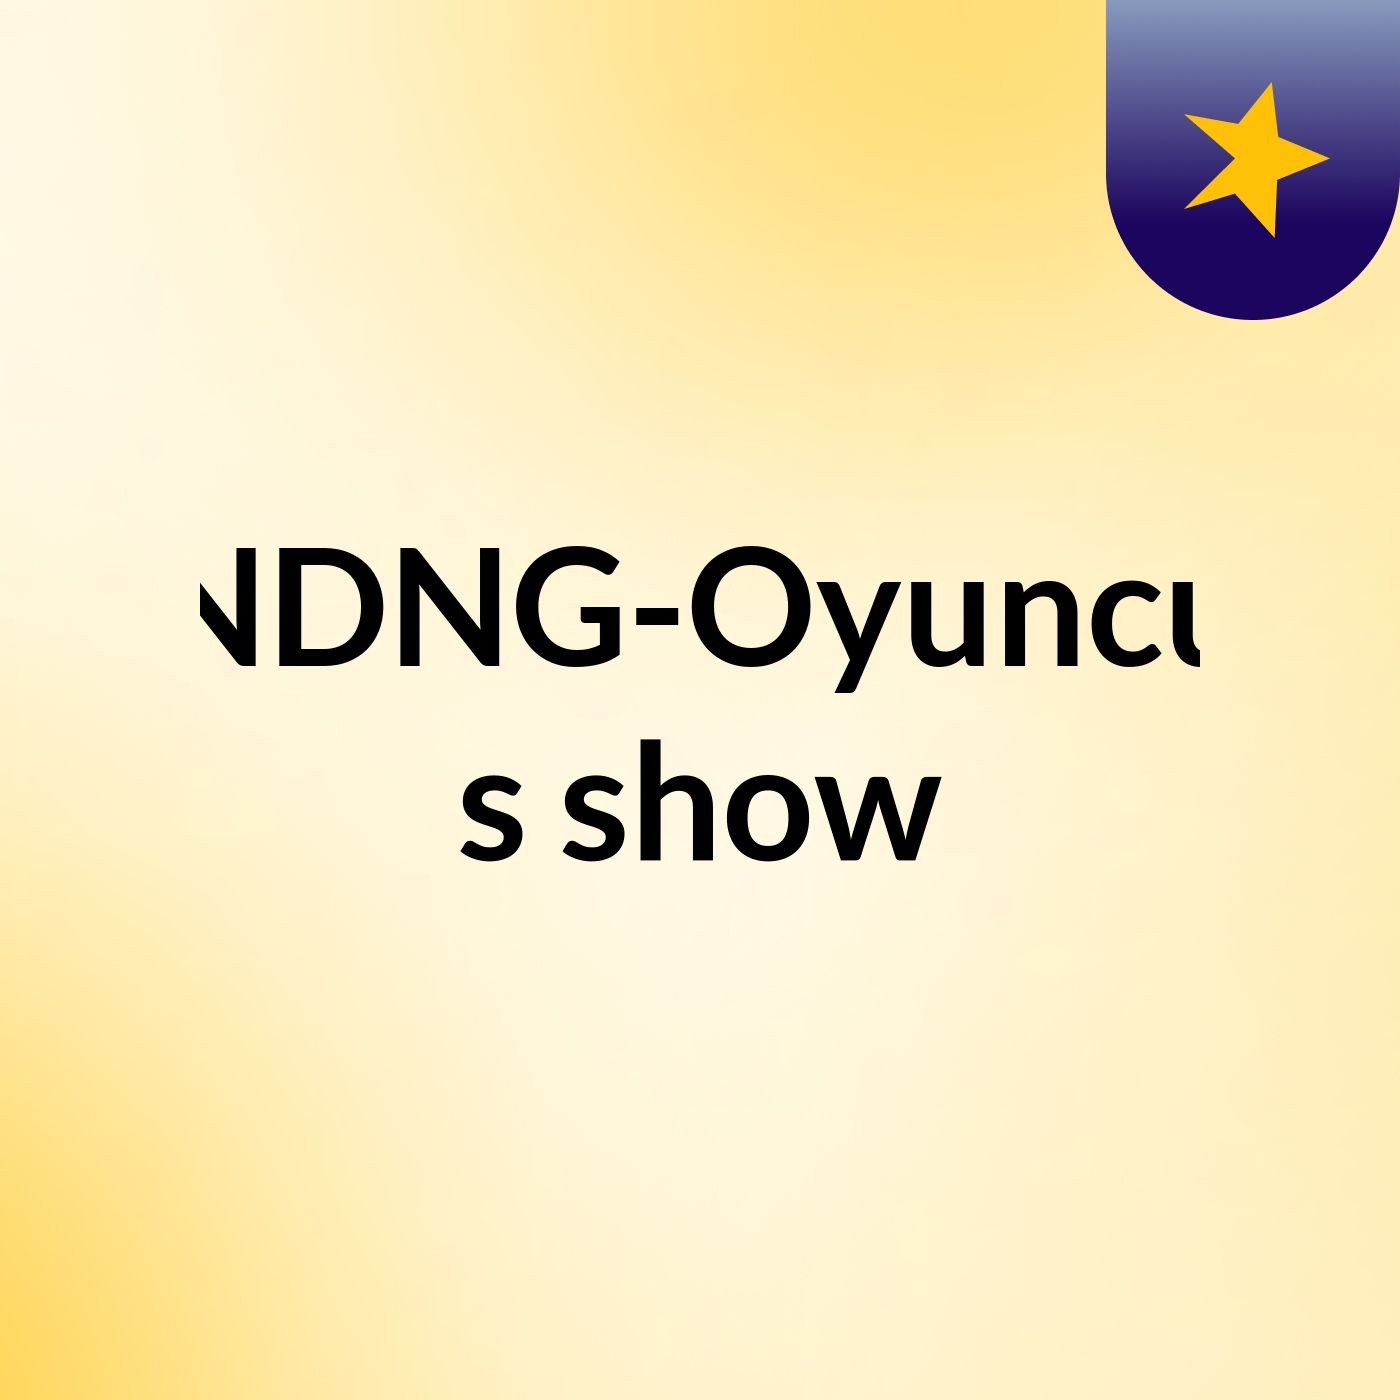 NDNG-Oyuncu's show